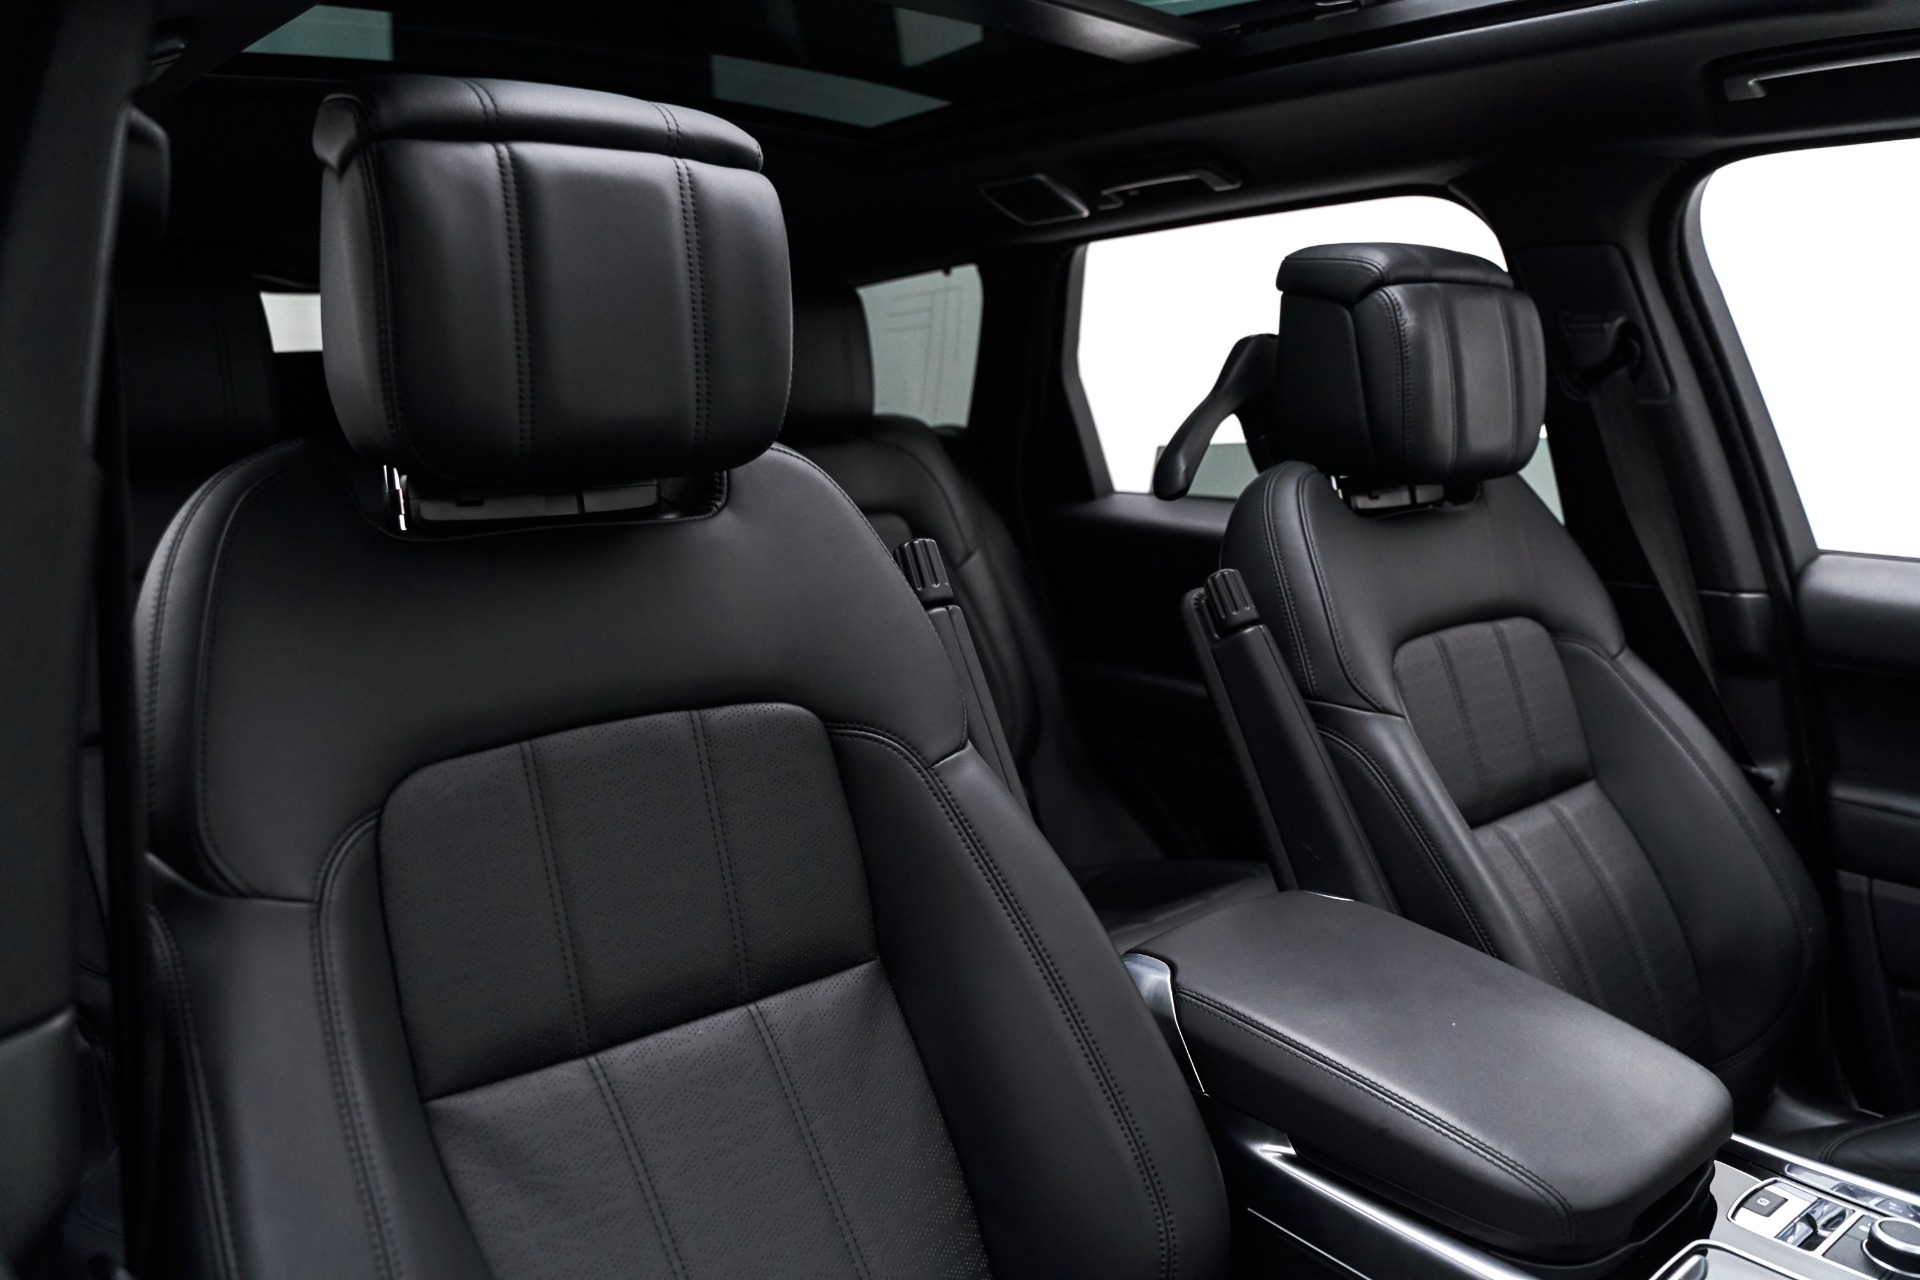 Range Rover leather interior seats.